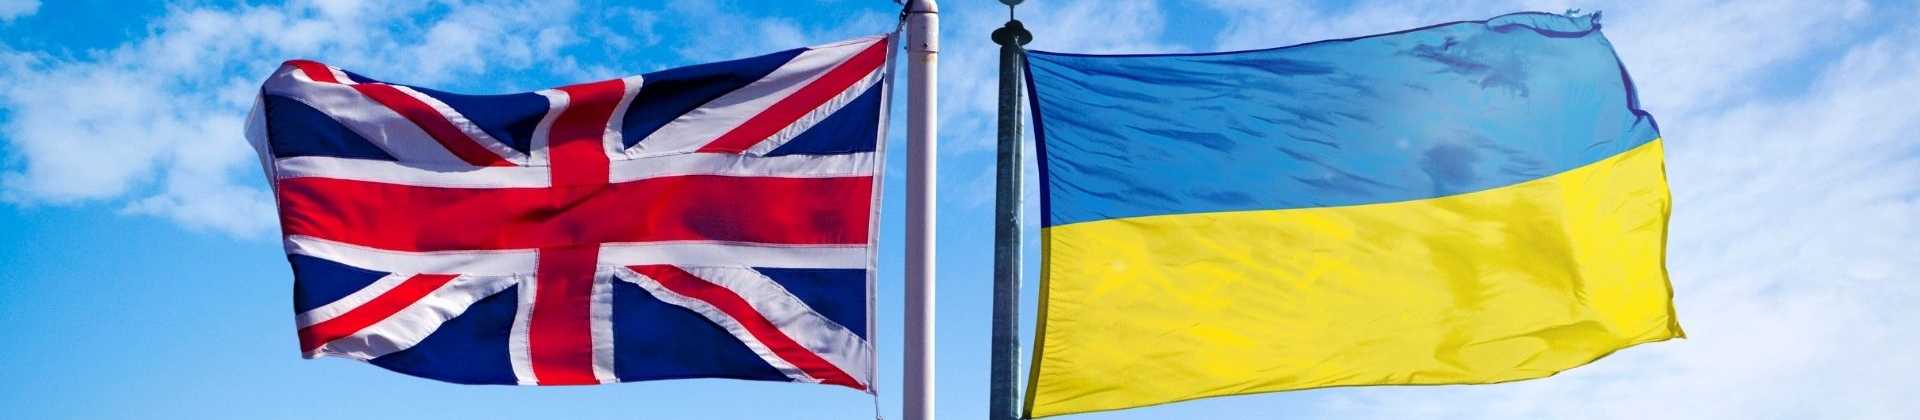 UK Extends Ukrainian Visas for 18 Months, But Housing Concerns Remain